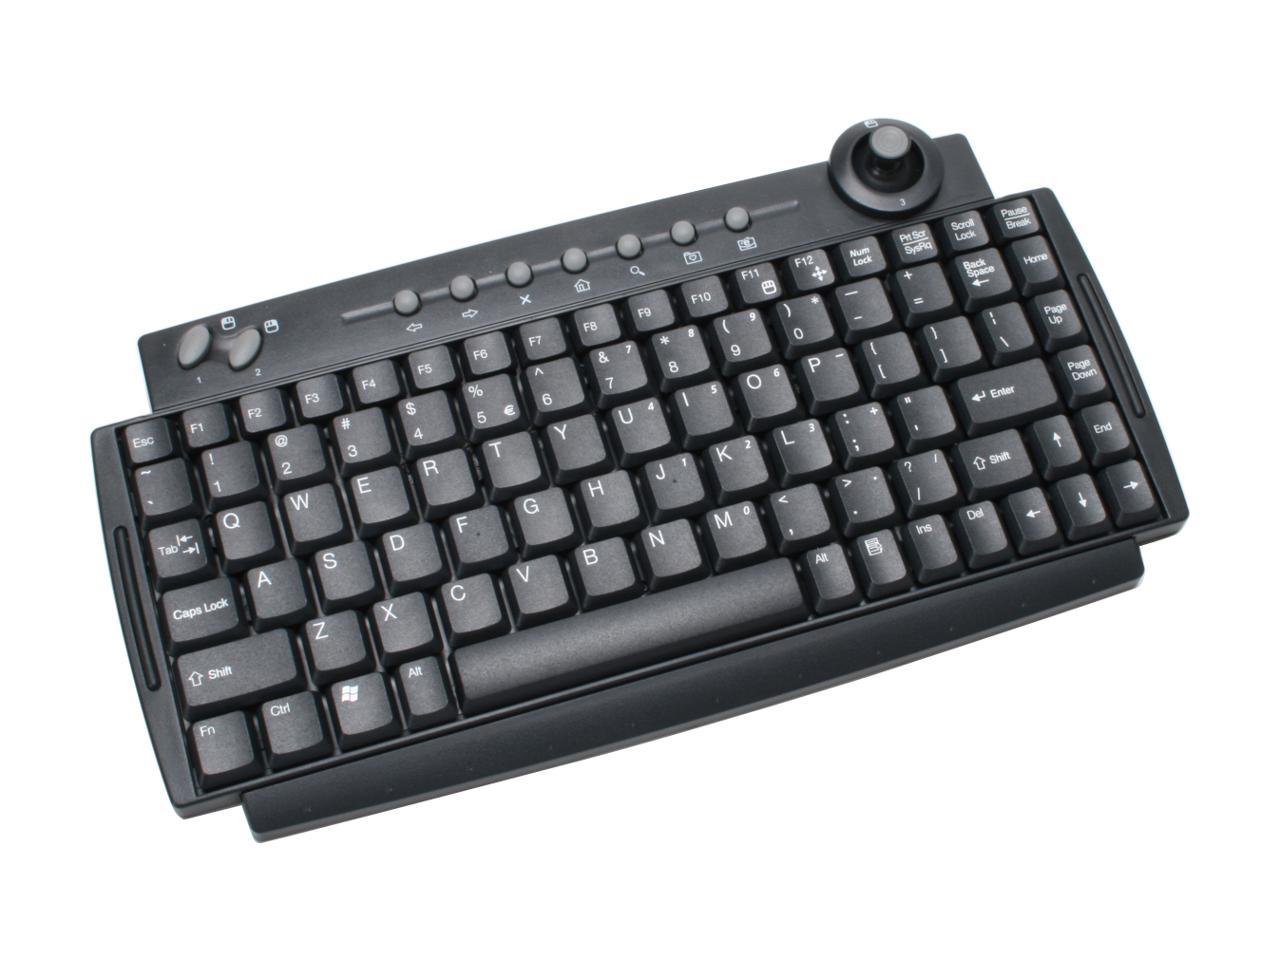 Btc 9116urf mini wireless keyboard draftkings sportsbook & casino